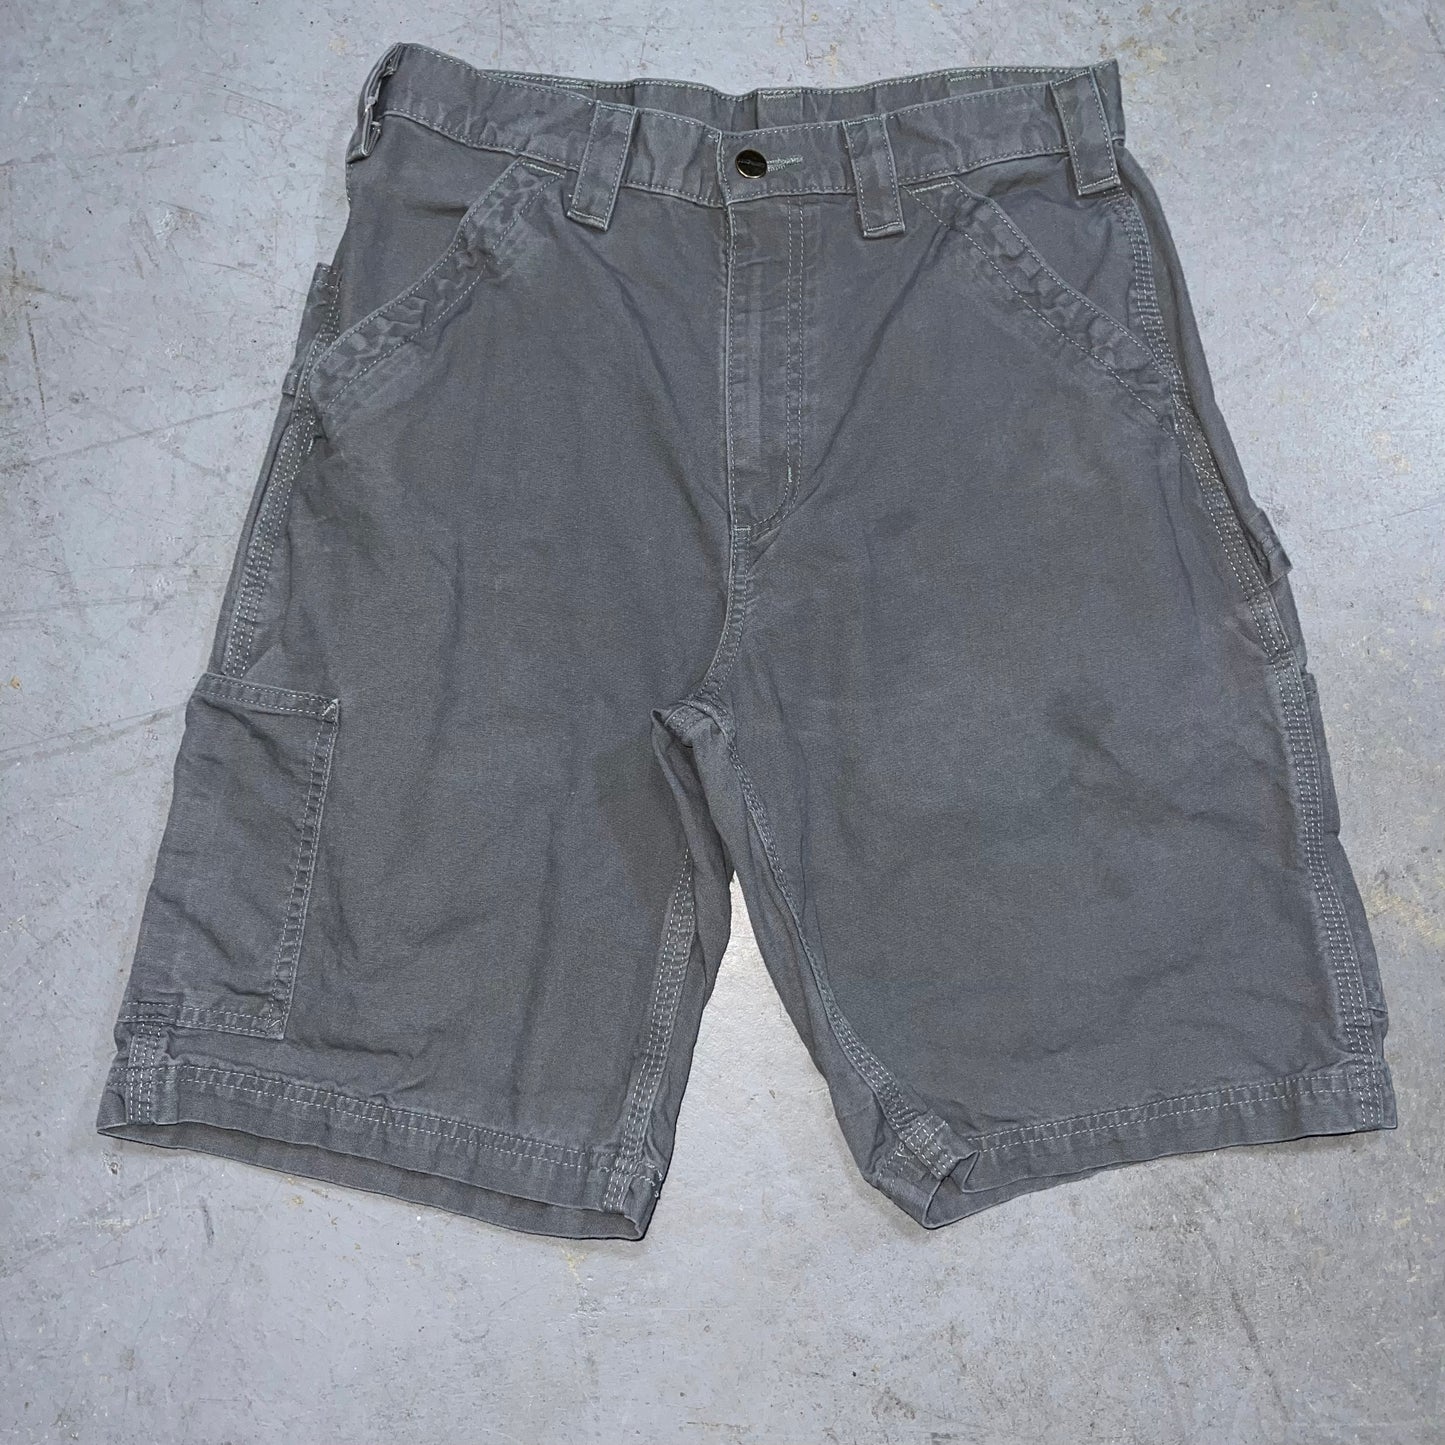 Carhartt Original Fit Carpenter Style Shorts. Size 32